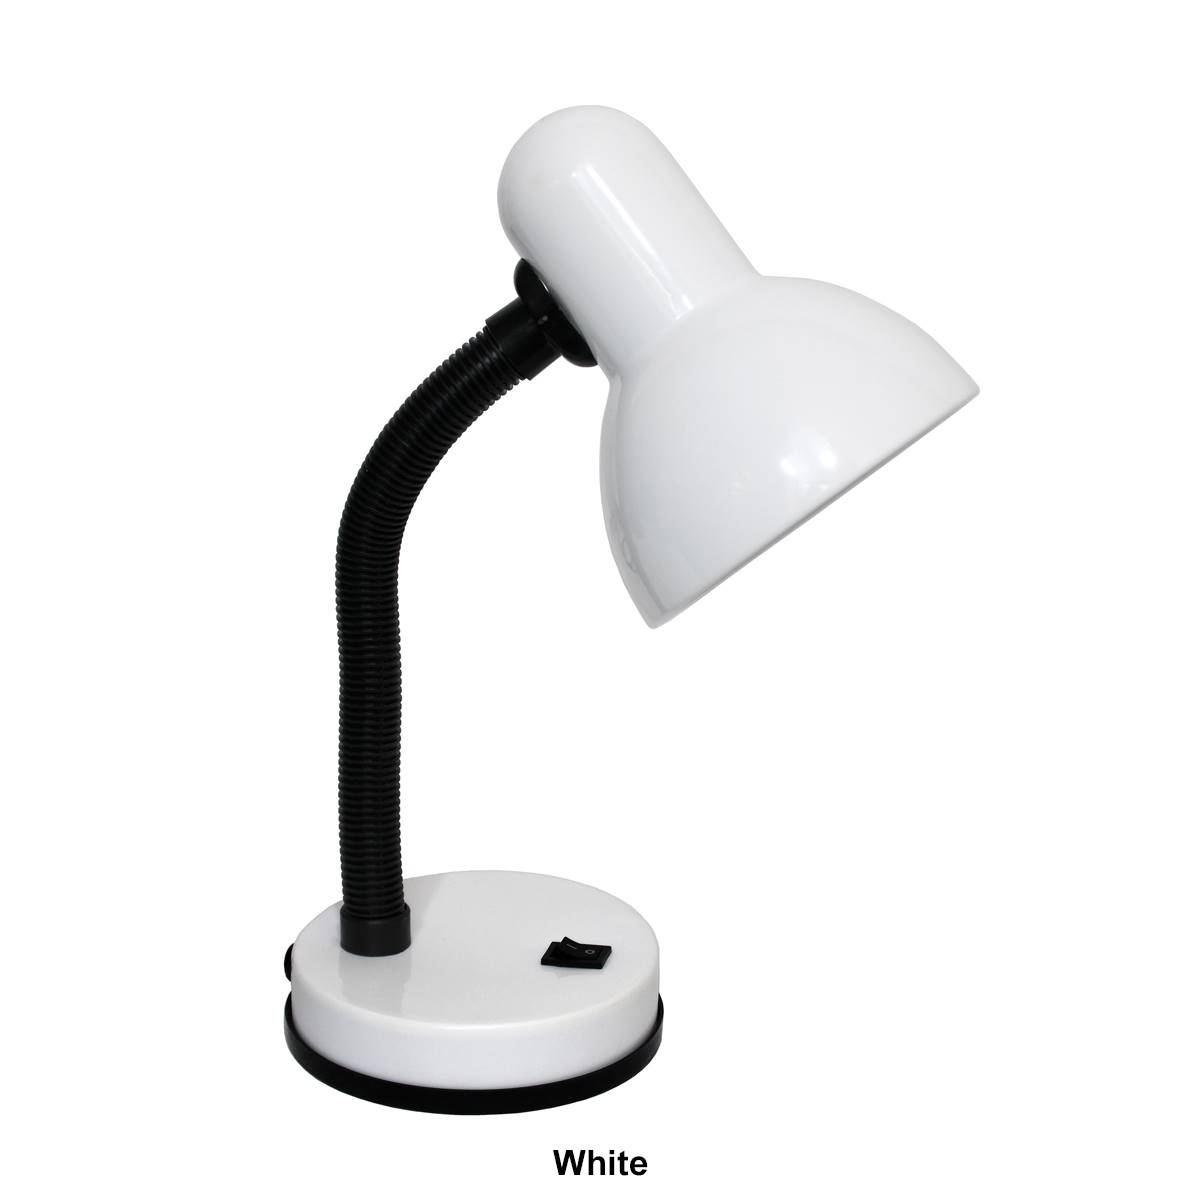 Simple Designs Basic Metal Desk Lamp W/Flexible Hose Neck